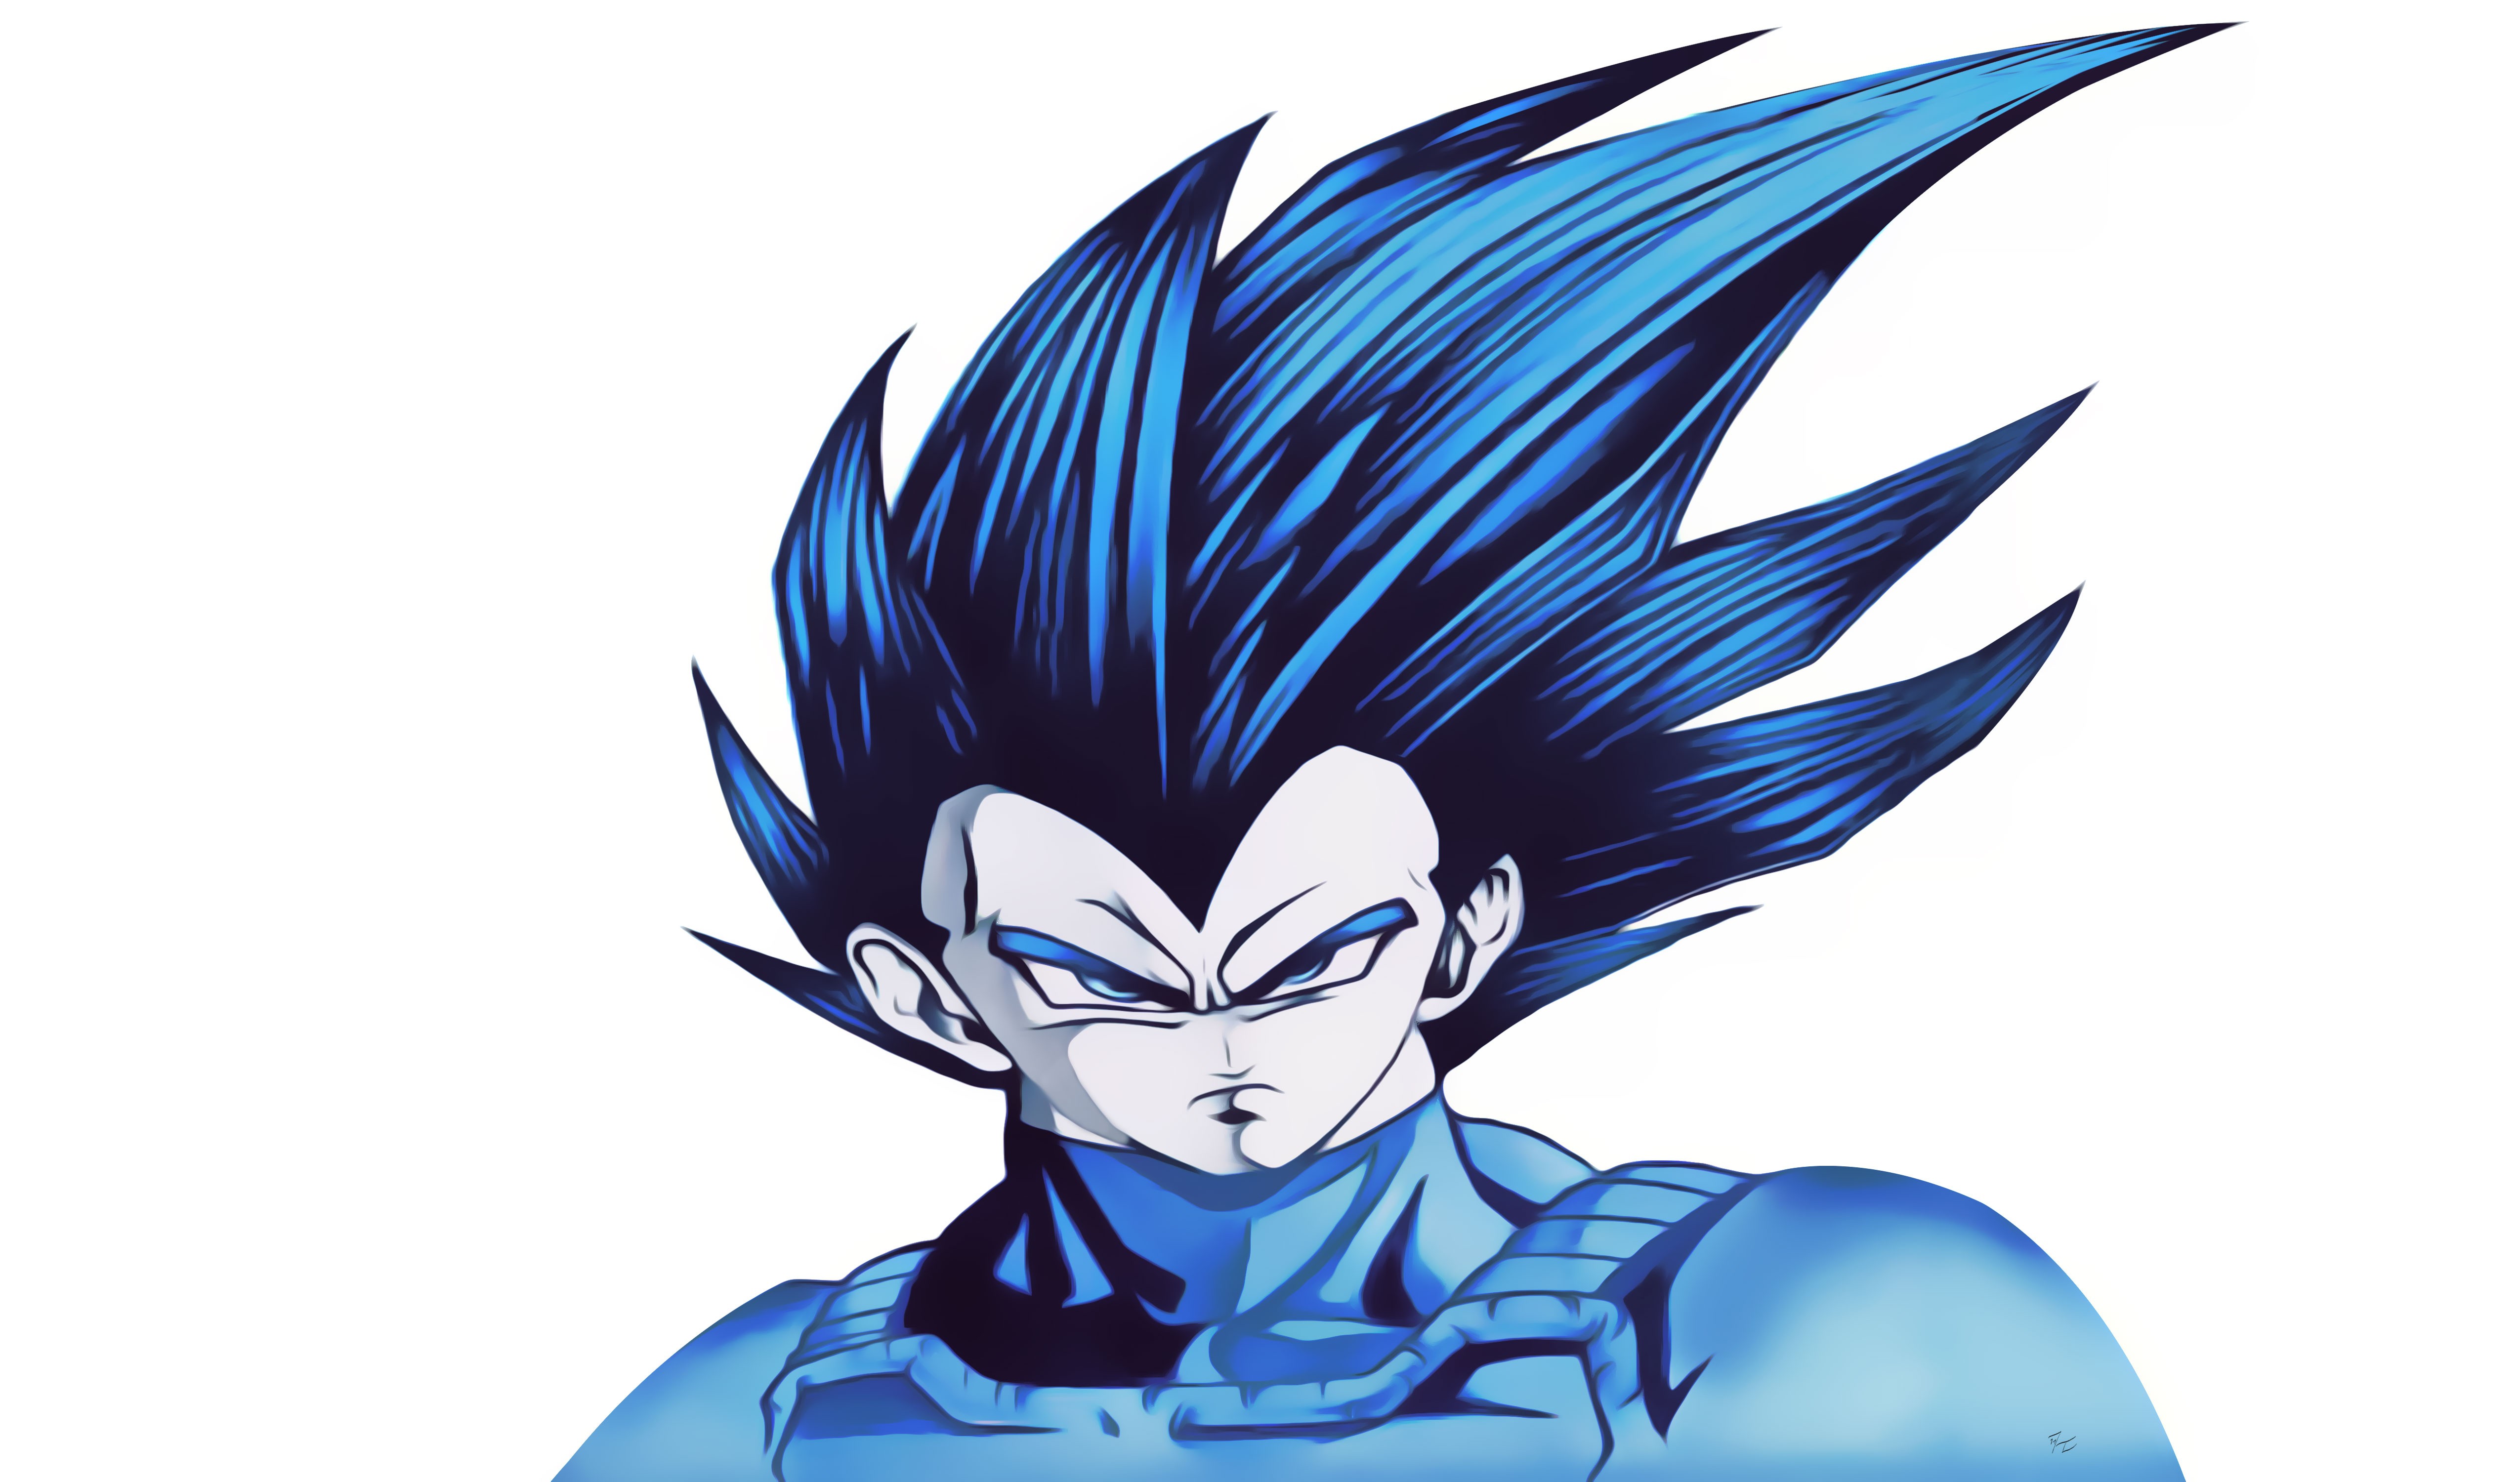 Anime 5100x3000 Dragon Ball Z fantasy art anime boys anime Vegeta blue hair blue eyes simple background white background angry face